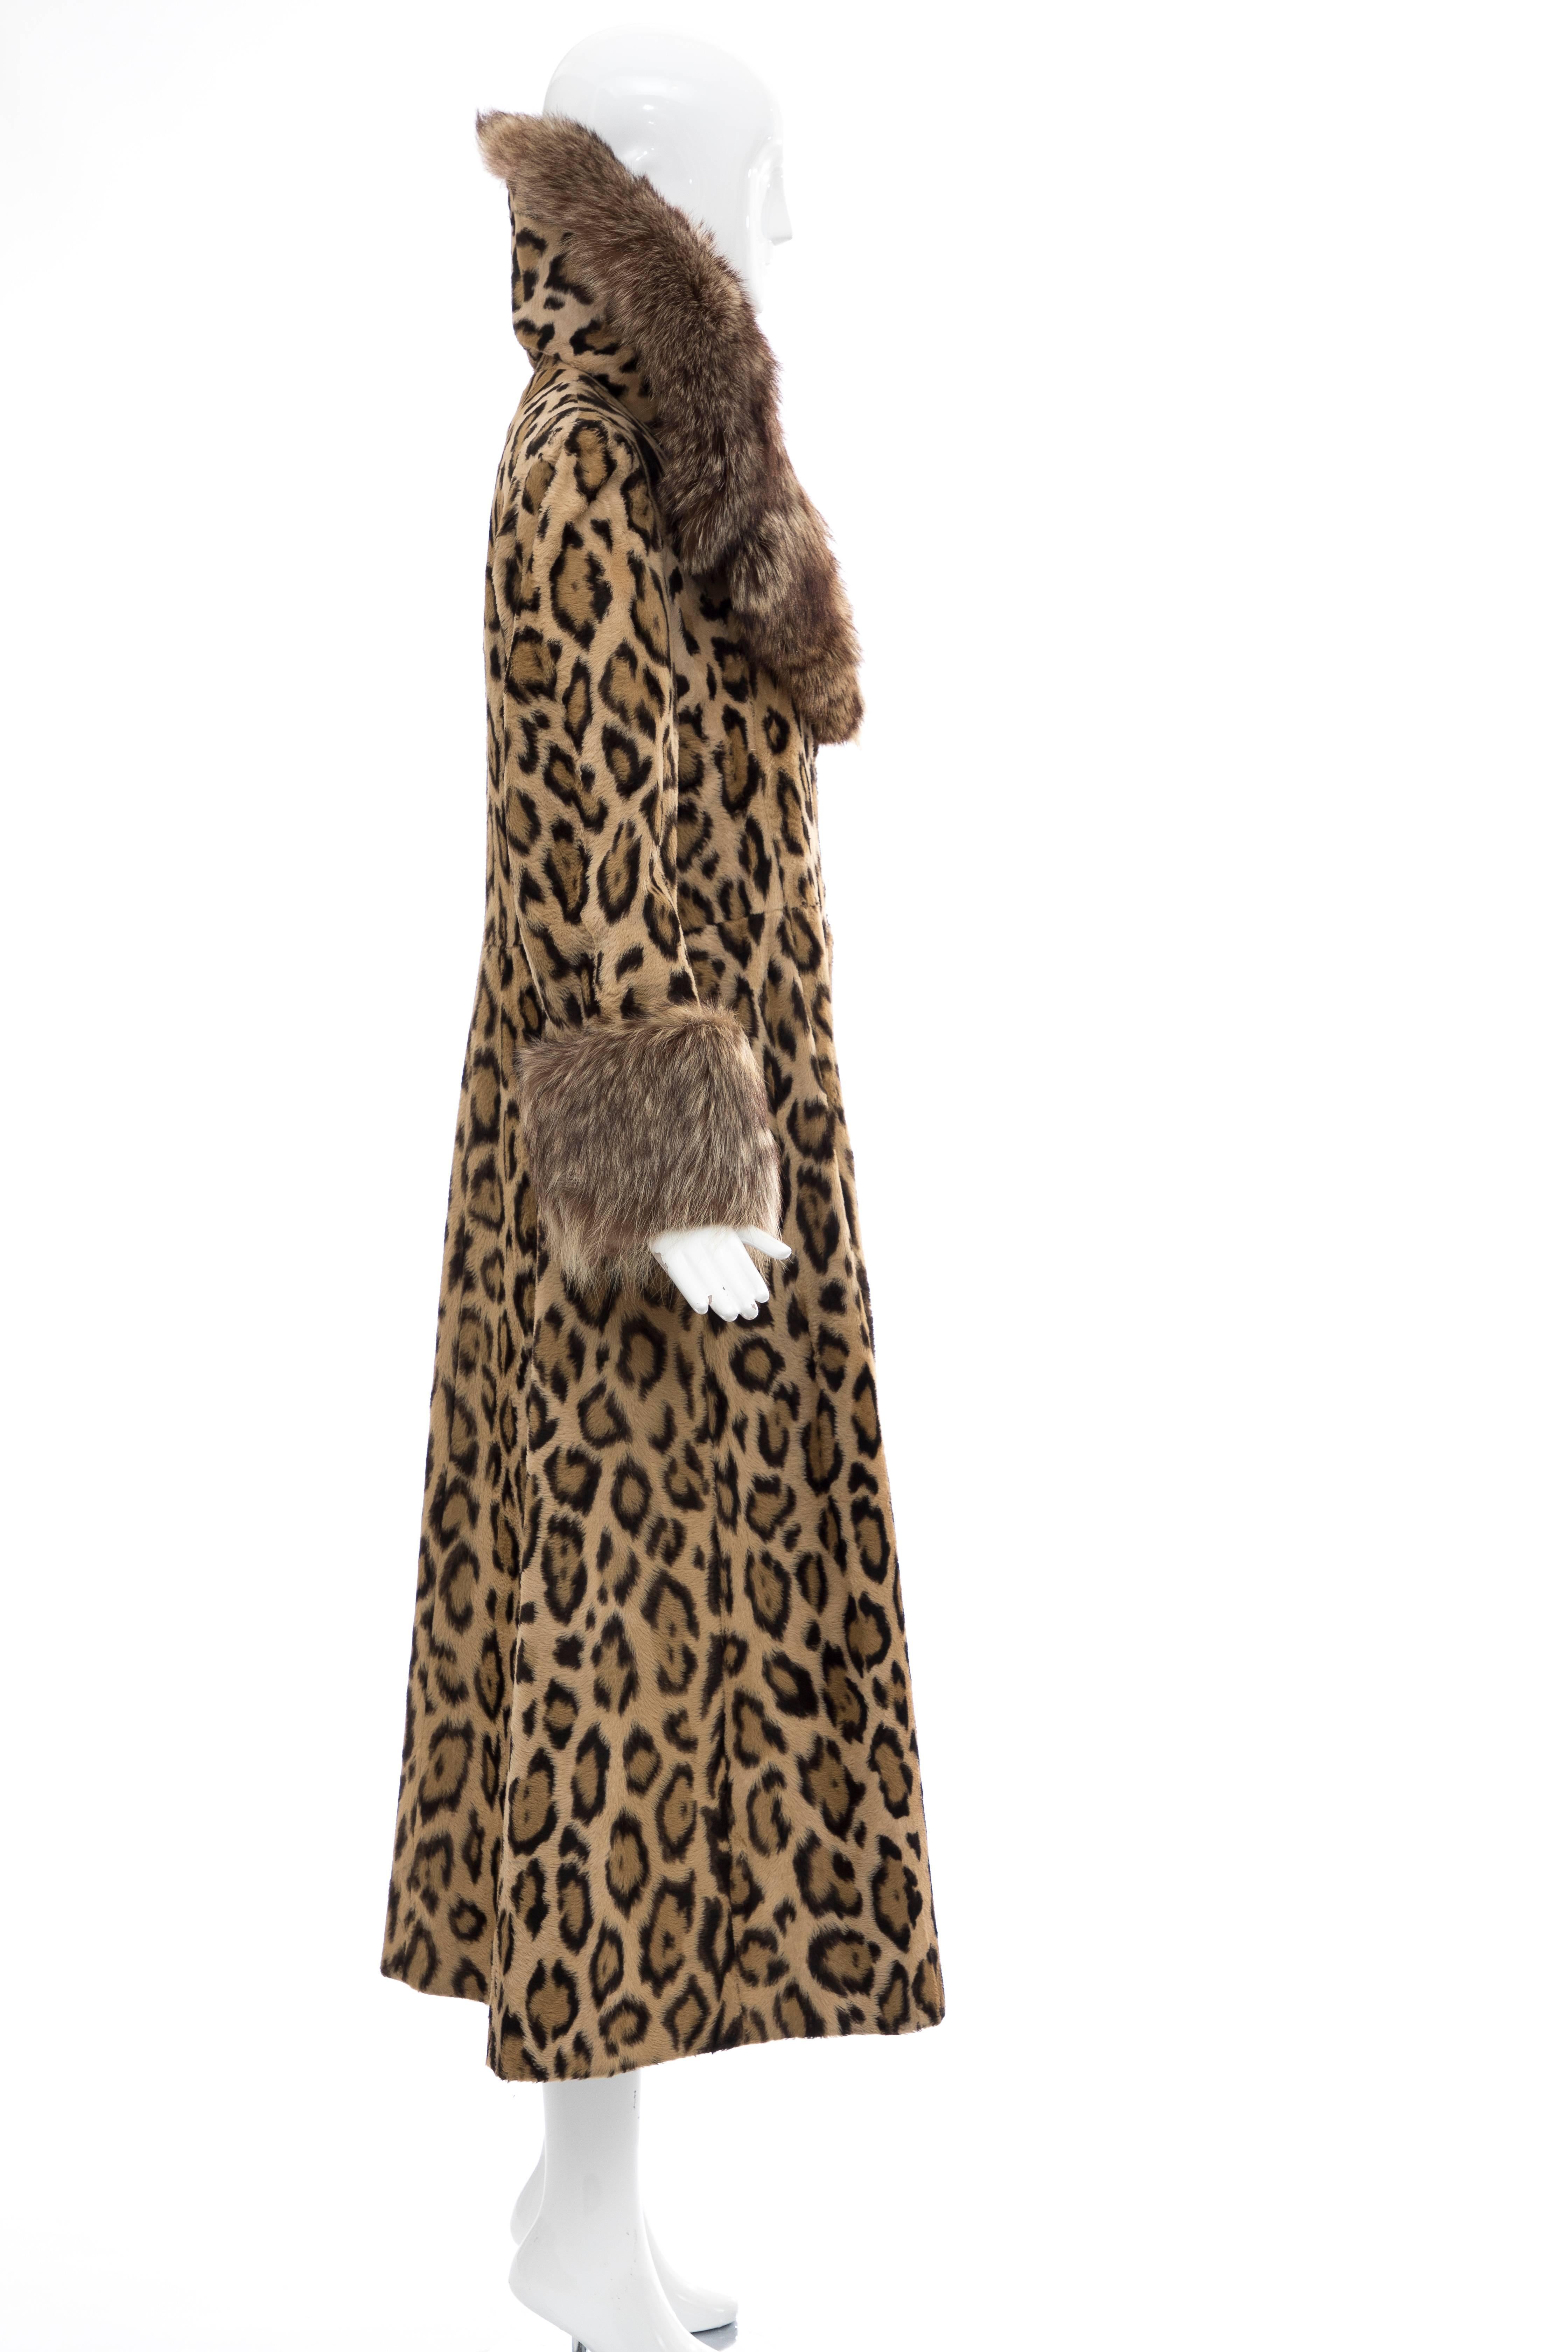 Goldring's Couture Faux Leopard Coat Dramatic Fur Collar & Cuffs, Circa: 1970's 3